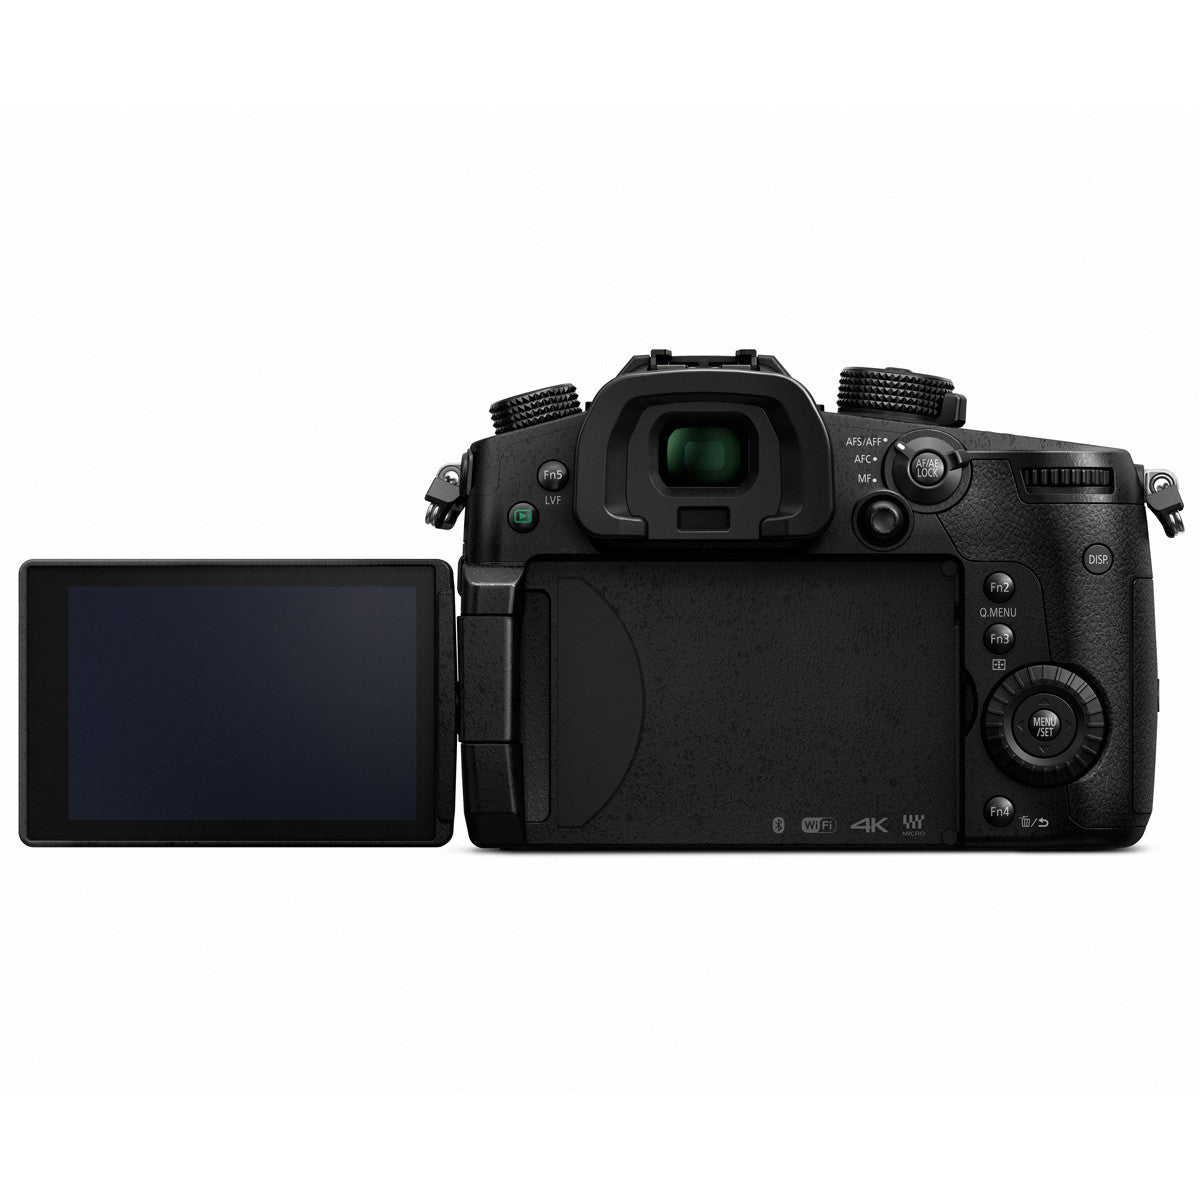 Panasonic Lumix DMC-GH5 Digital Camera with Leica 12-60mm Lens Kit